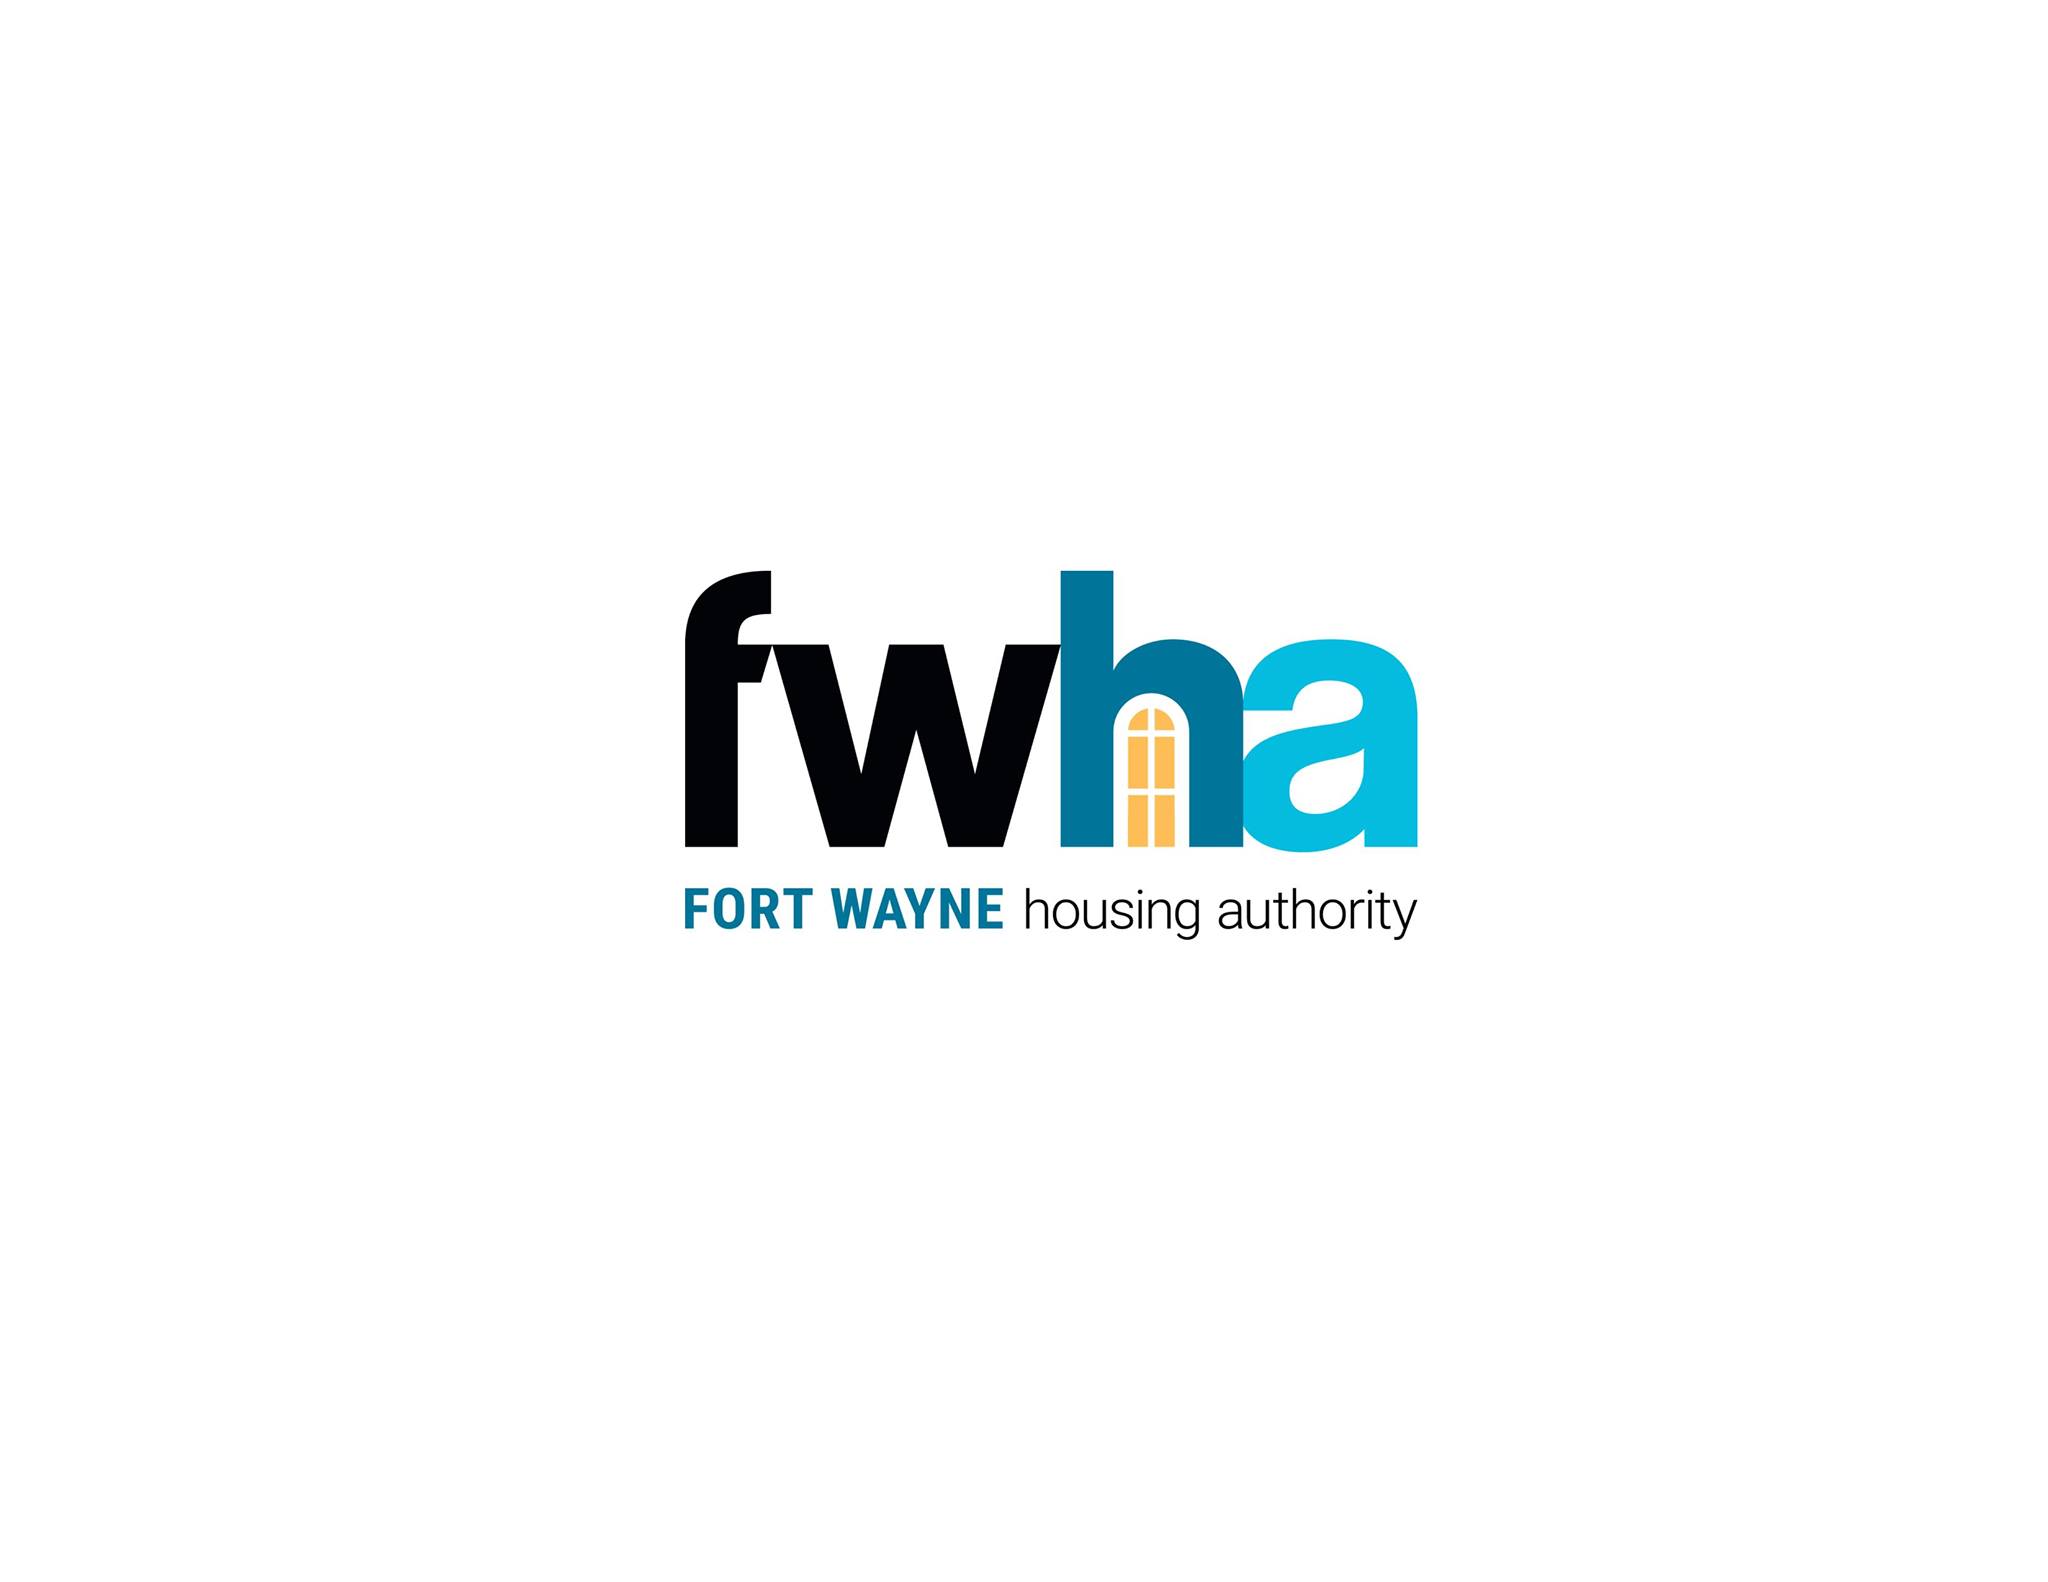 Fort Wayne Housing Authority